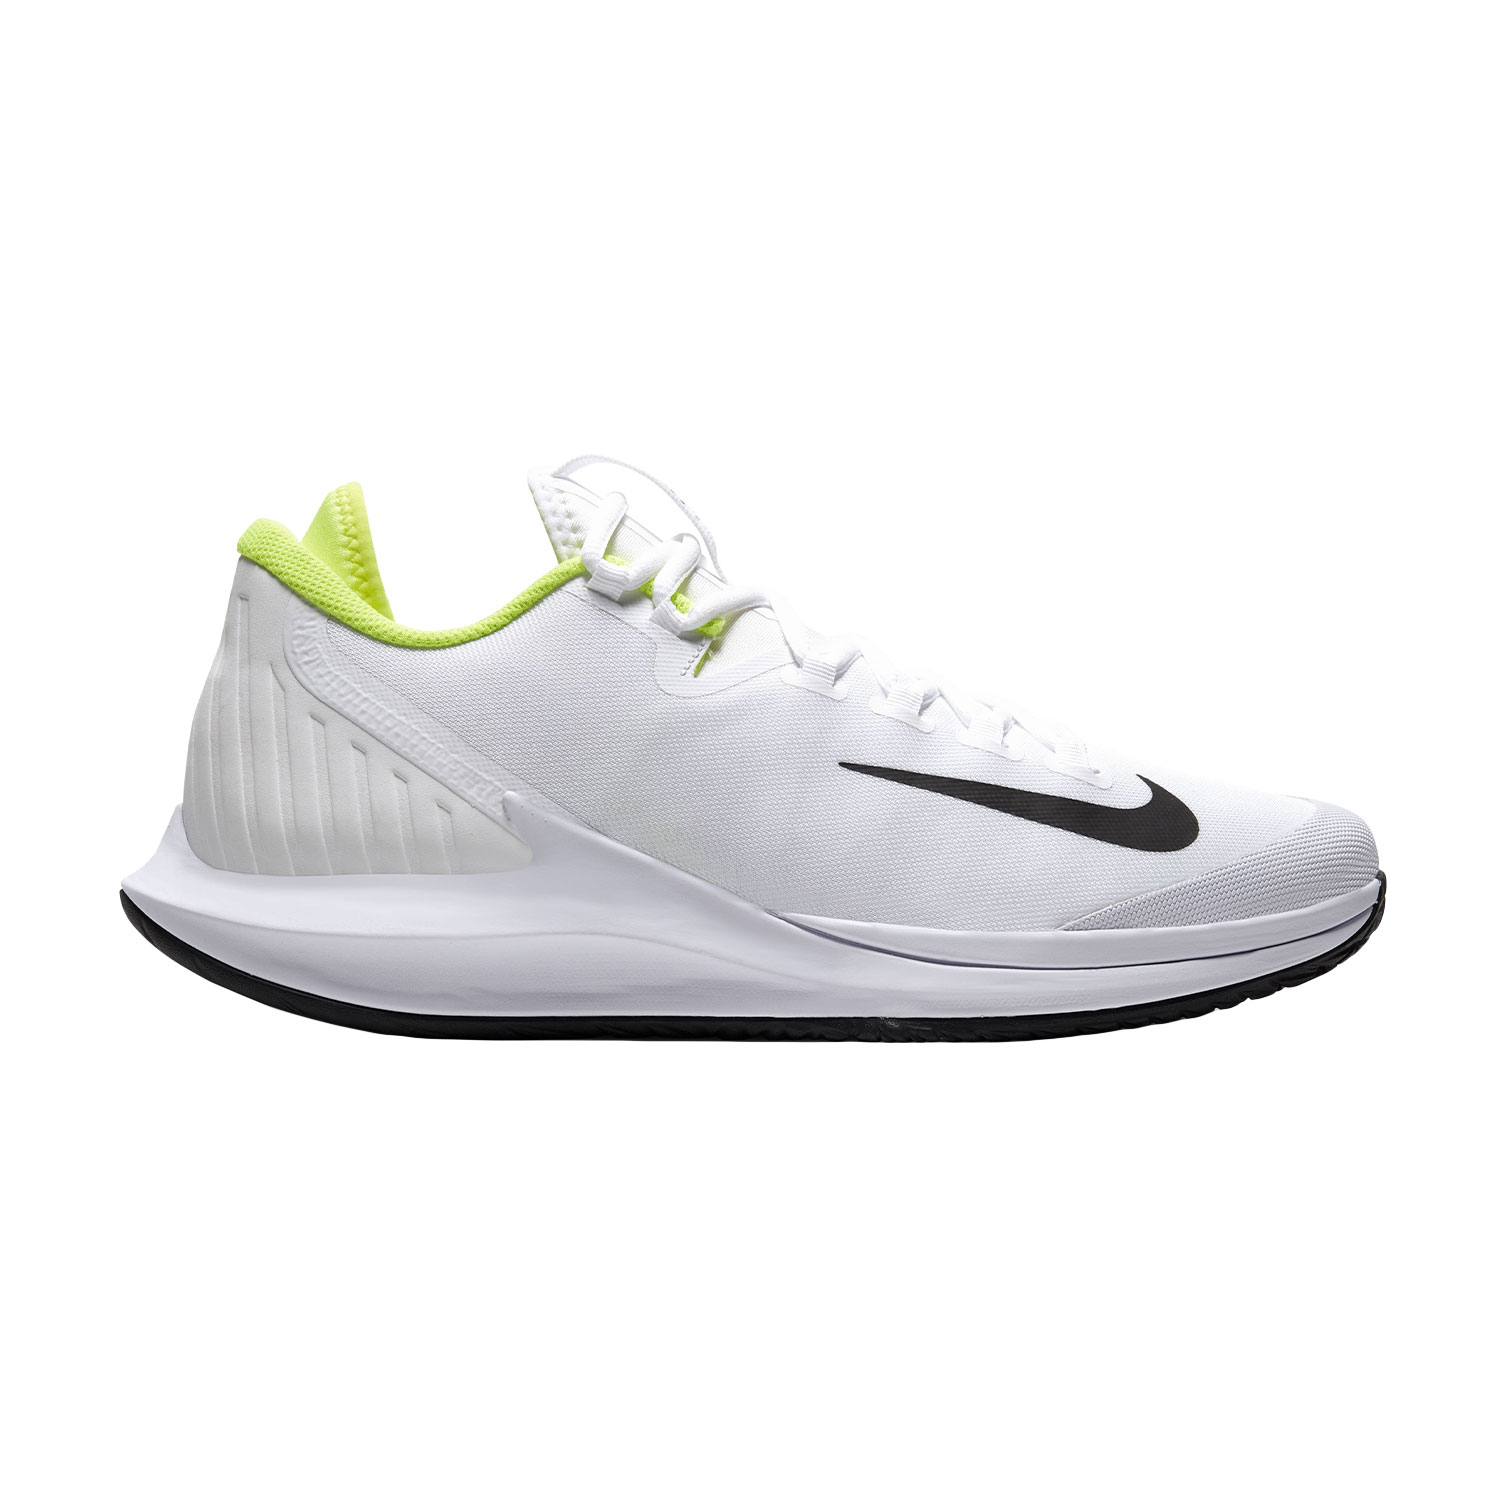 Nike Zoom Zero HC Men's Tennis Shoes - White/Black/Volt